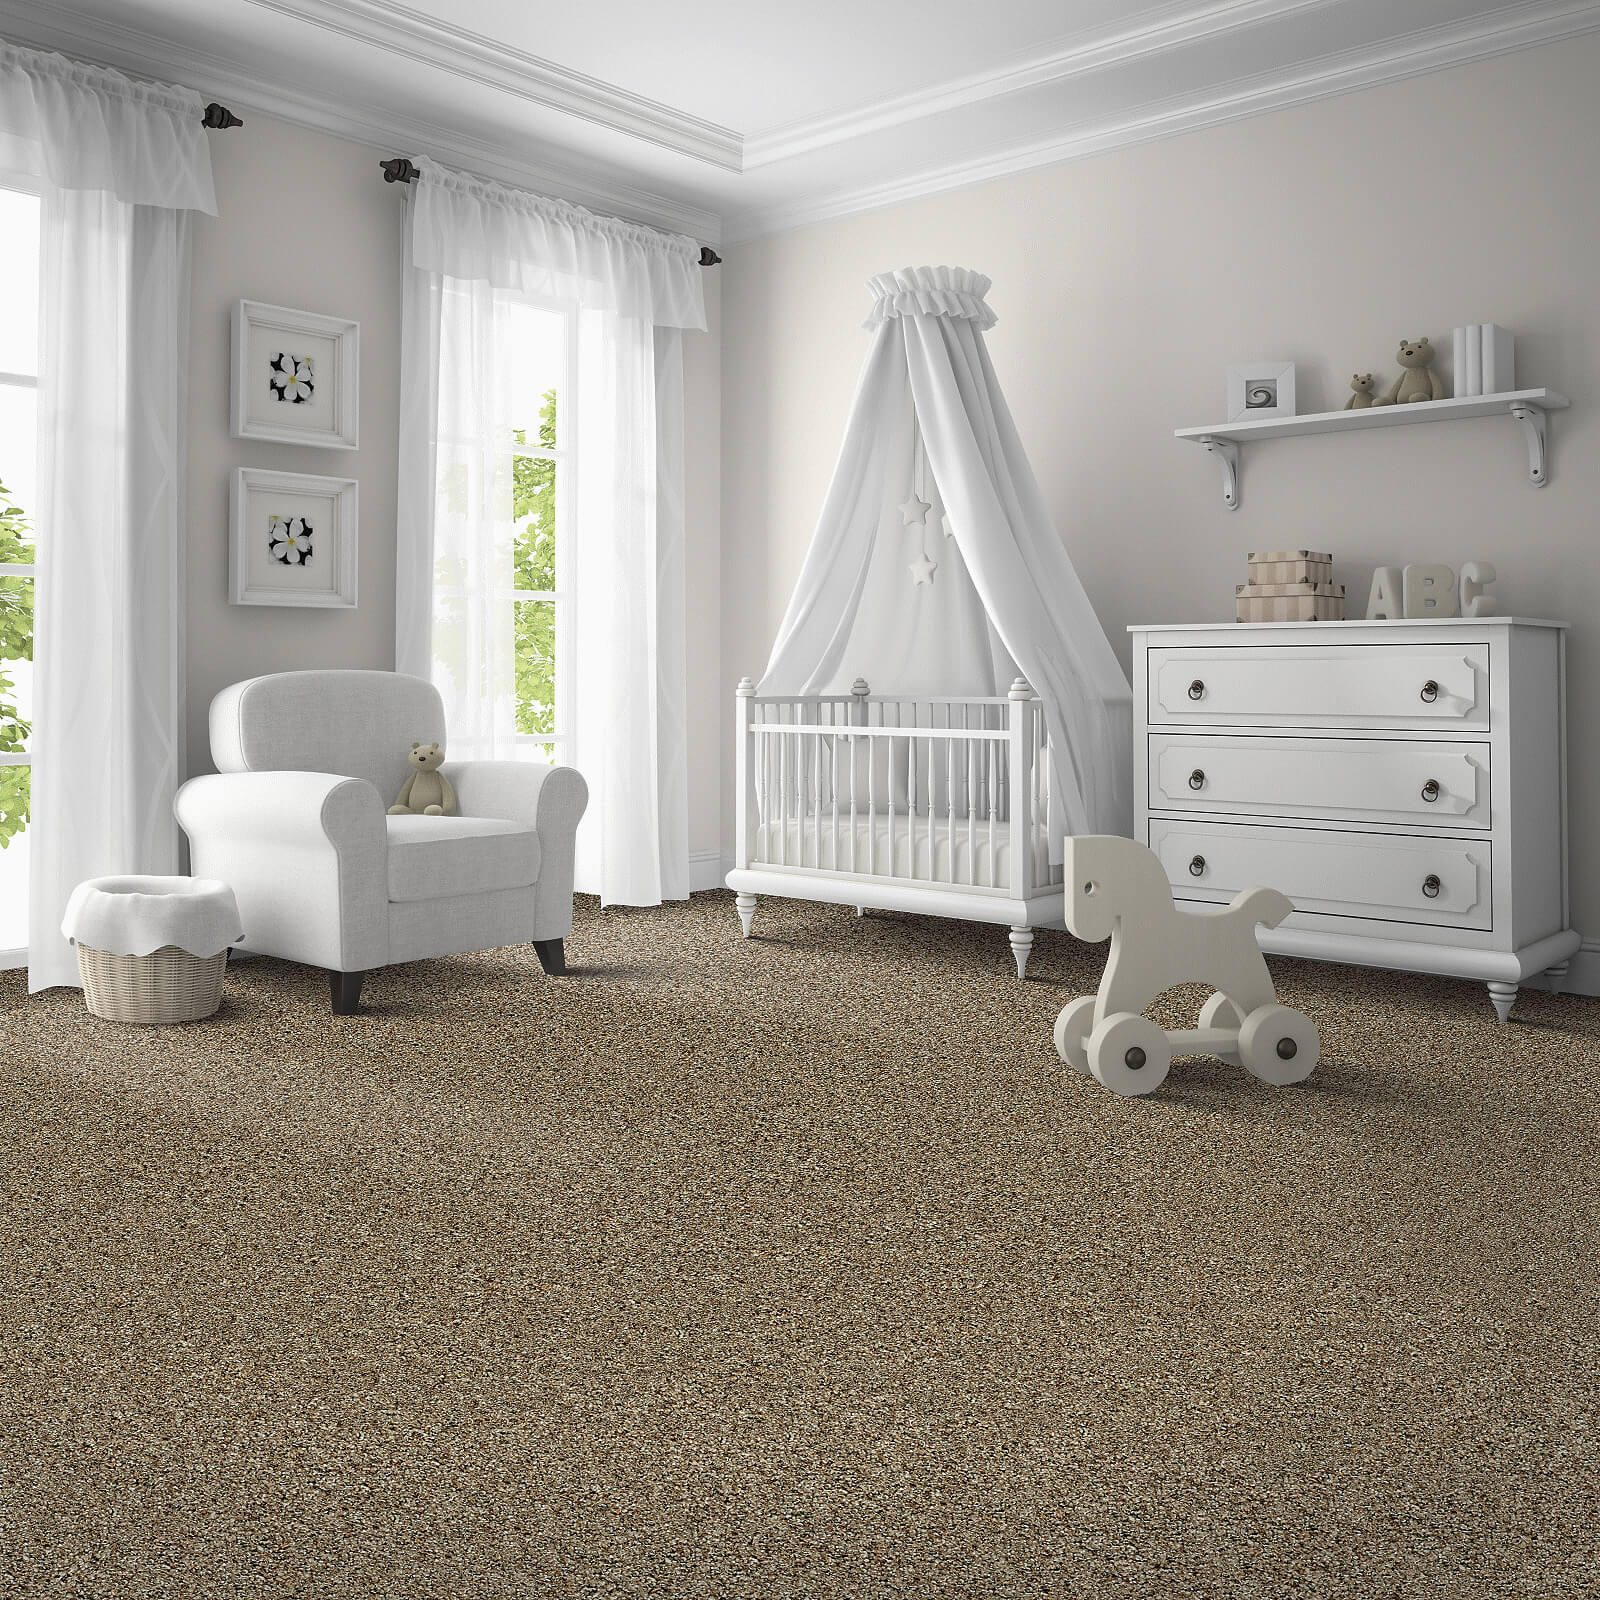 Kids room carpet flooring | Wellston Decorating Center, Inc.